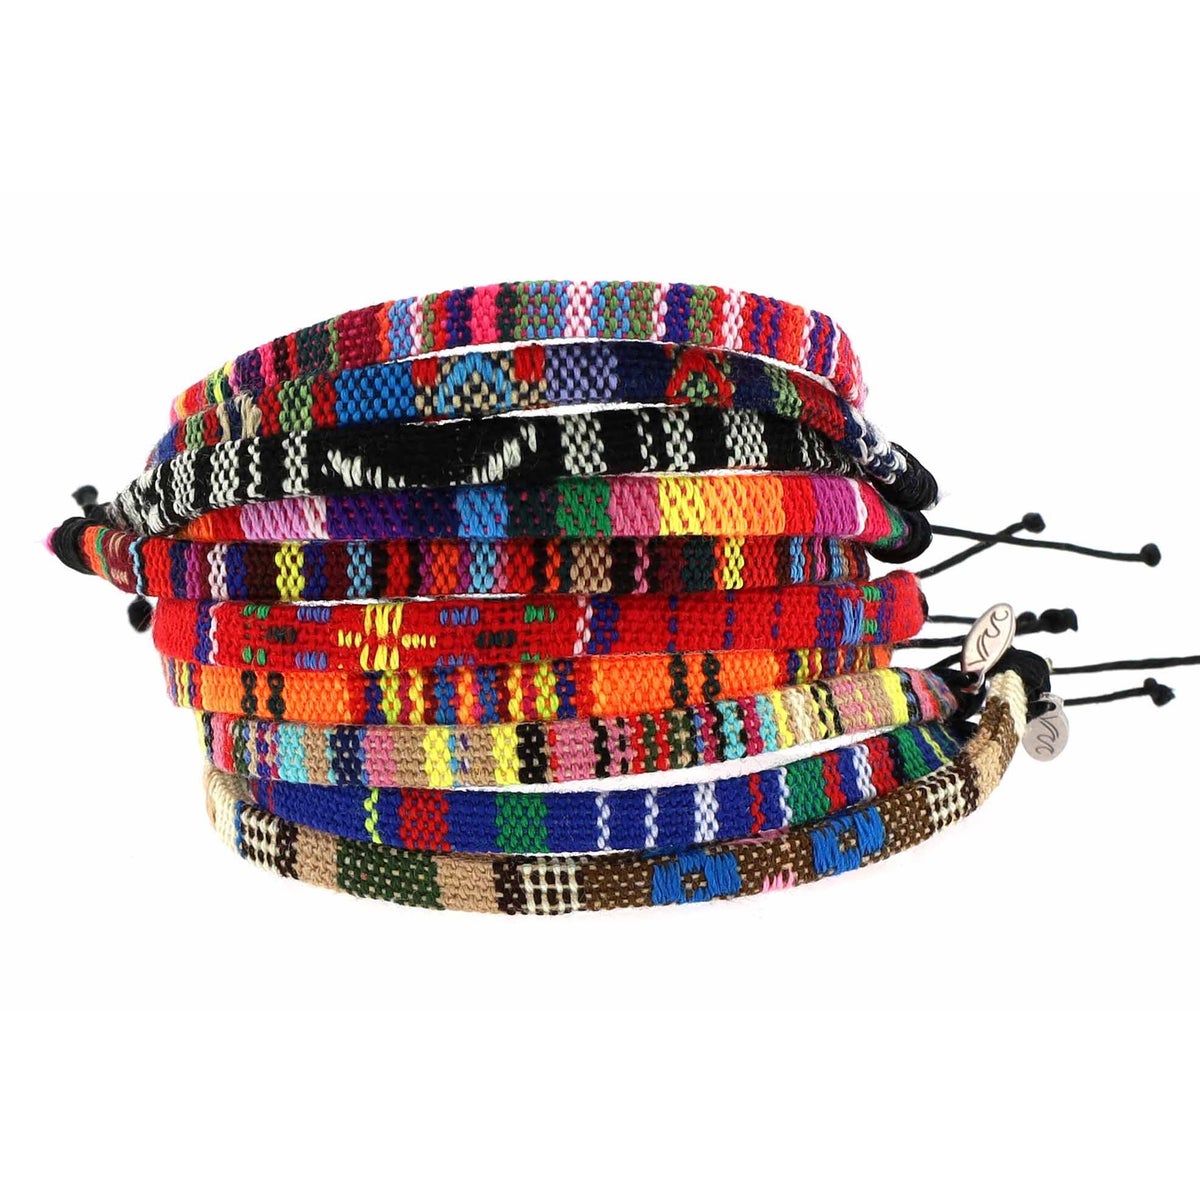 Virtu Made Bracelets 100 Assortment